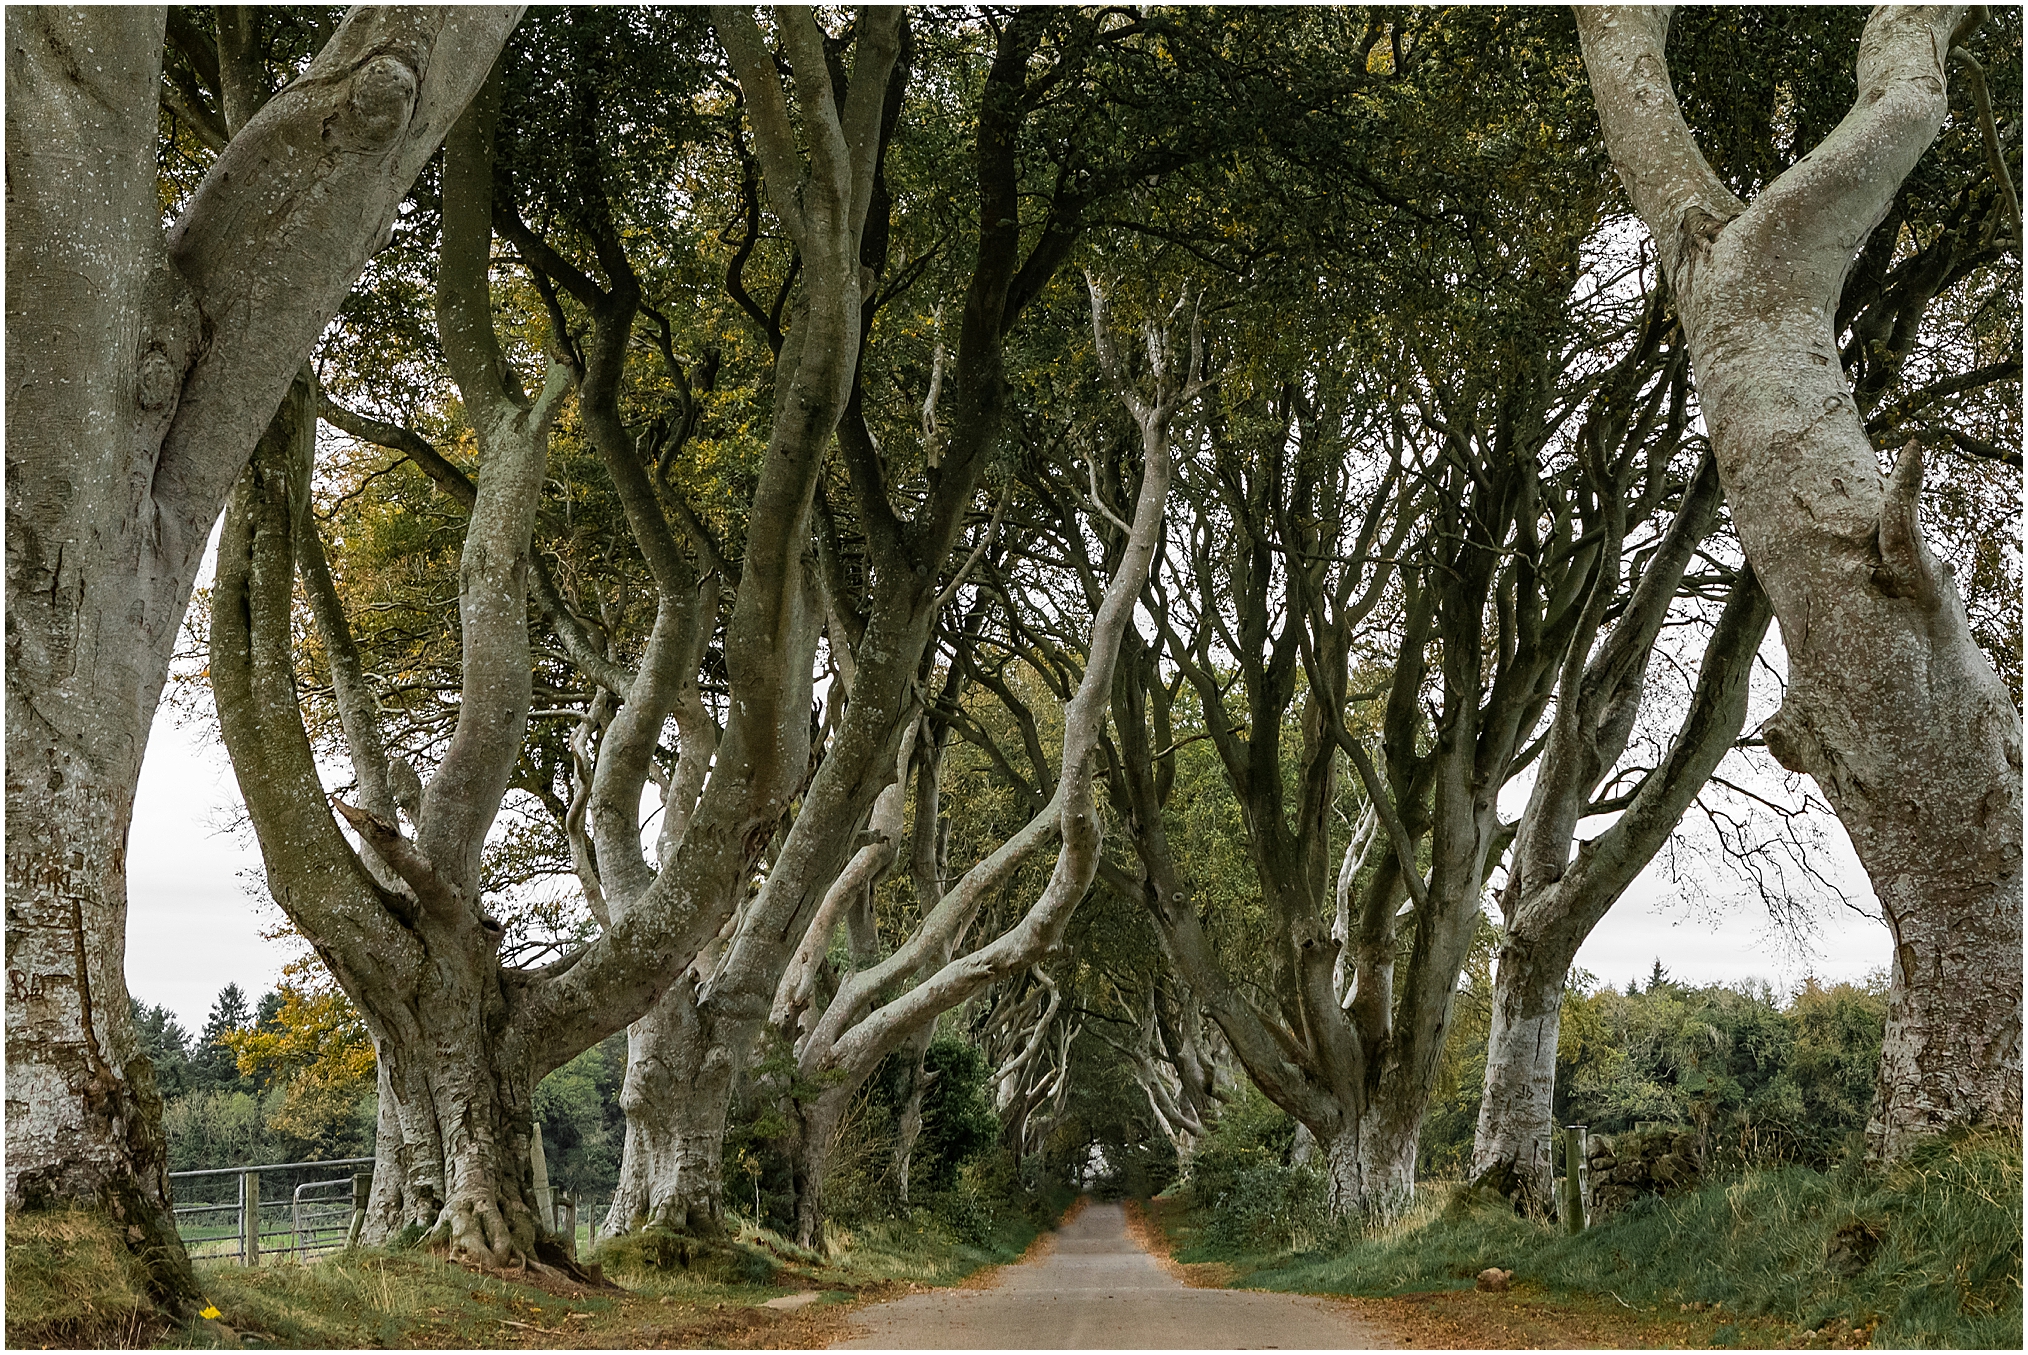 Northern Coast, Ireland; Ballymoney, Ballymena, Bushmills, irish countryside. The Dark Hedges from Game of Thrones.